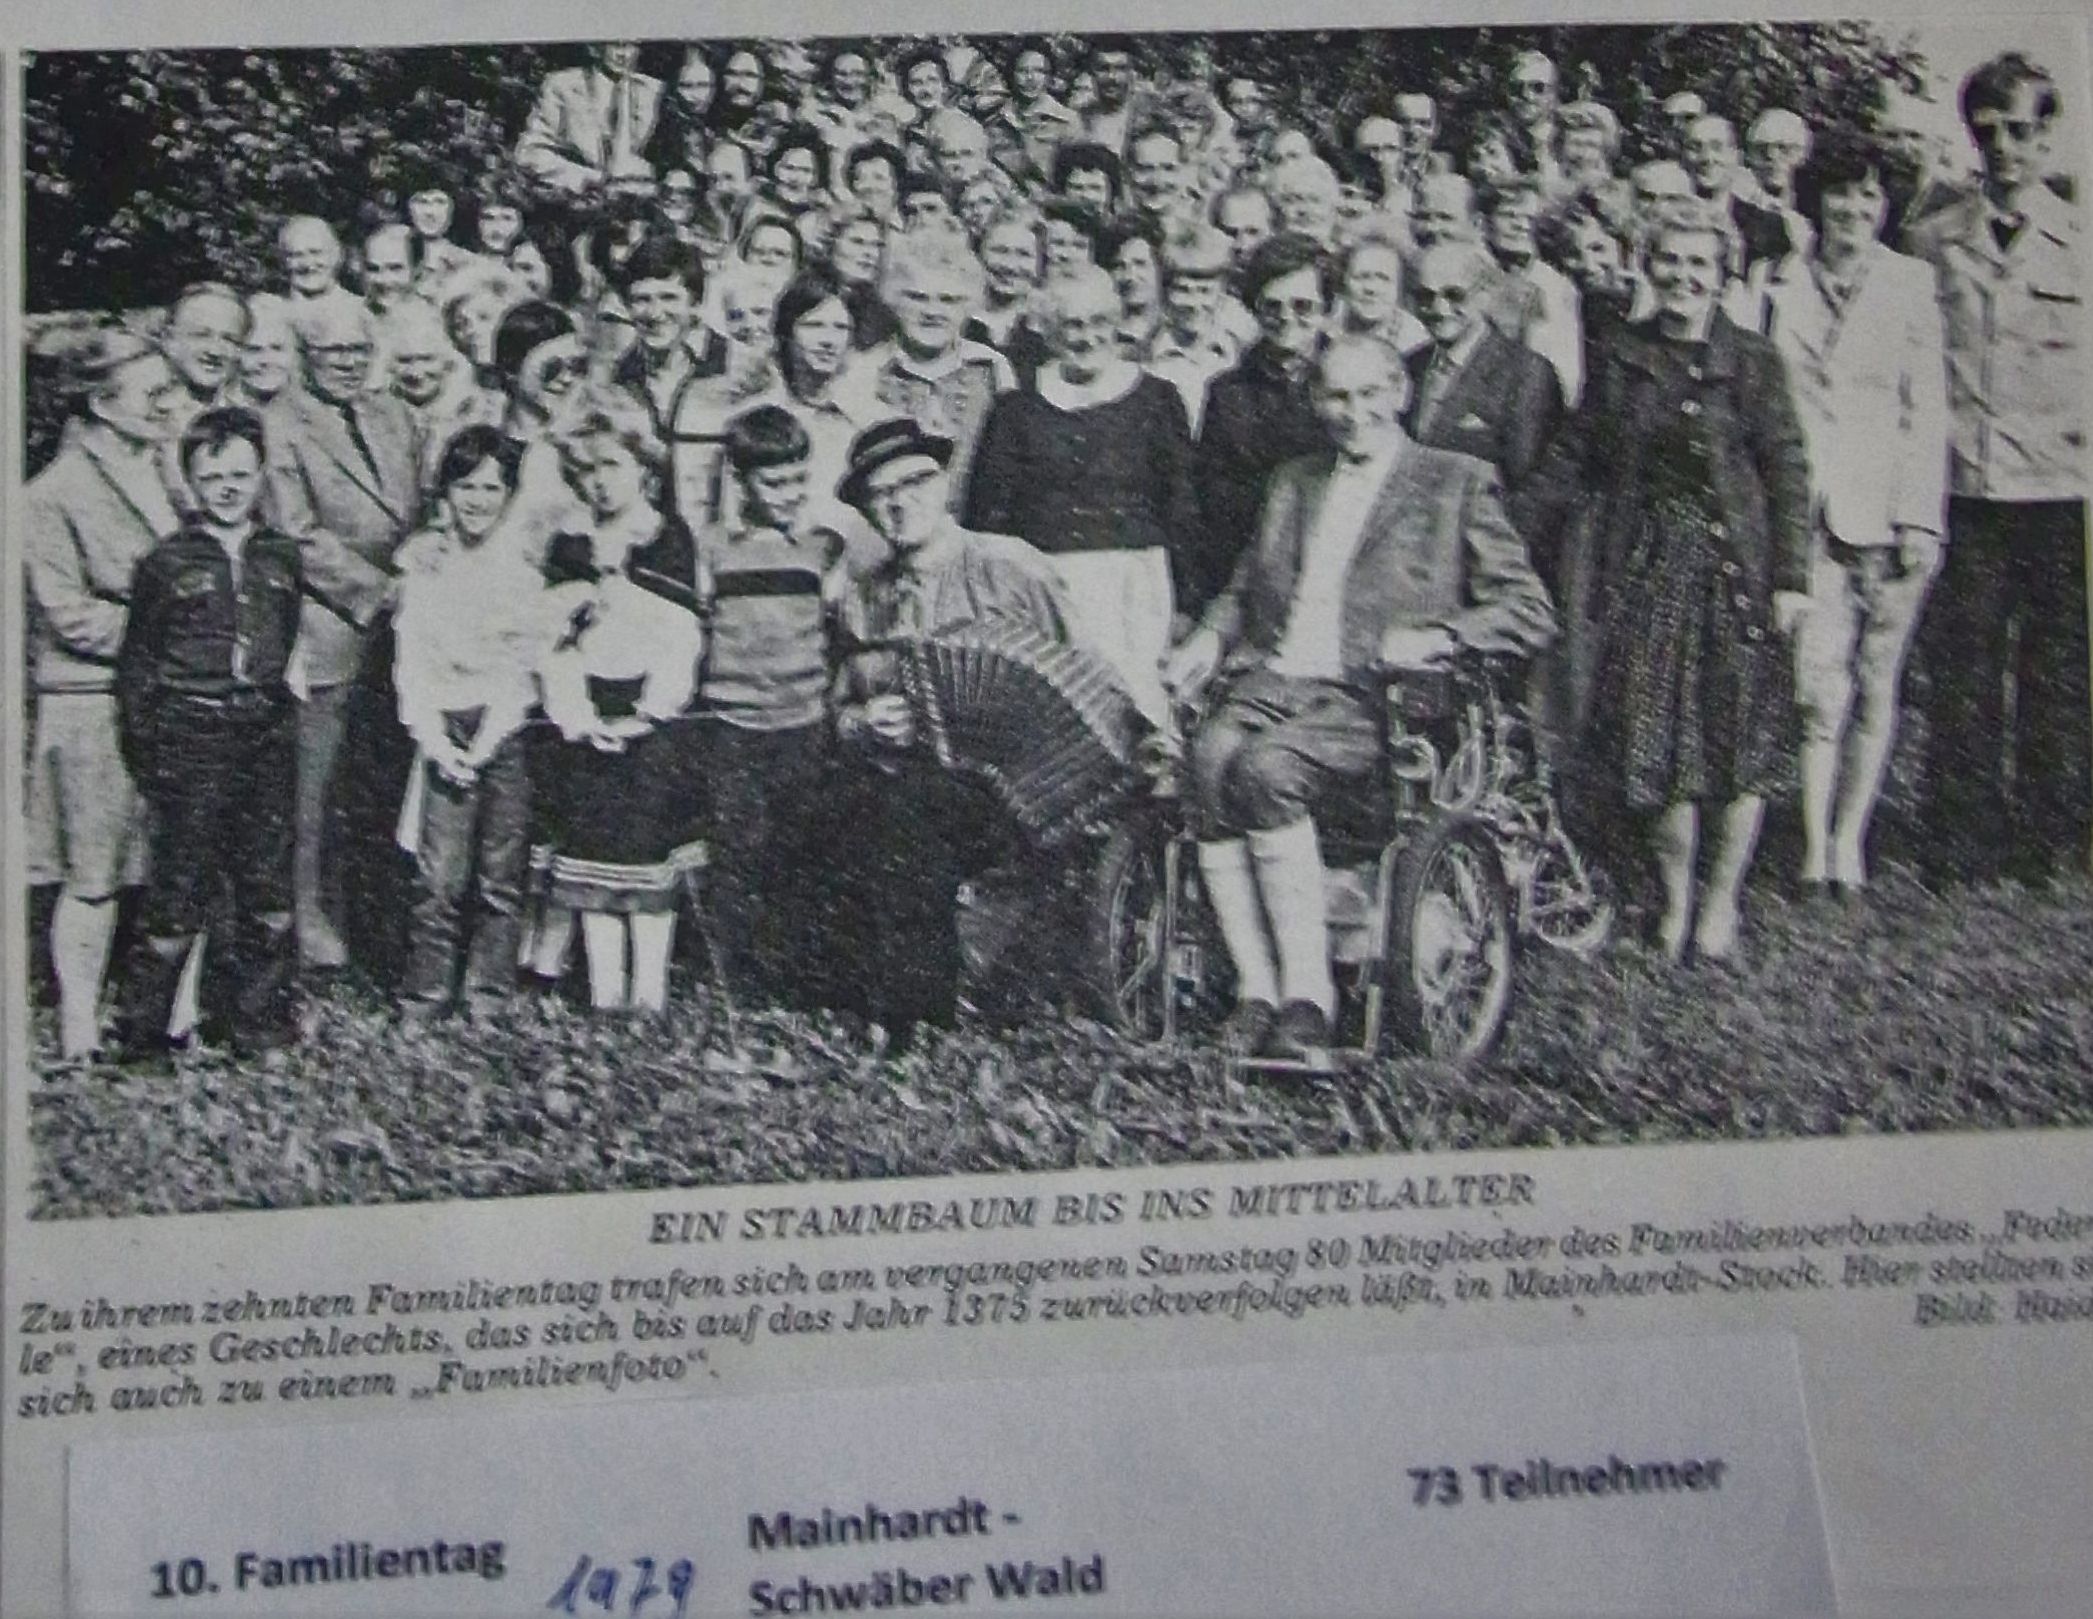 Mainhardt-Schwäber Wald 1979, 73 TN